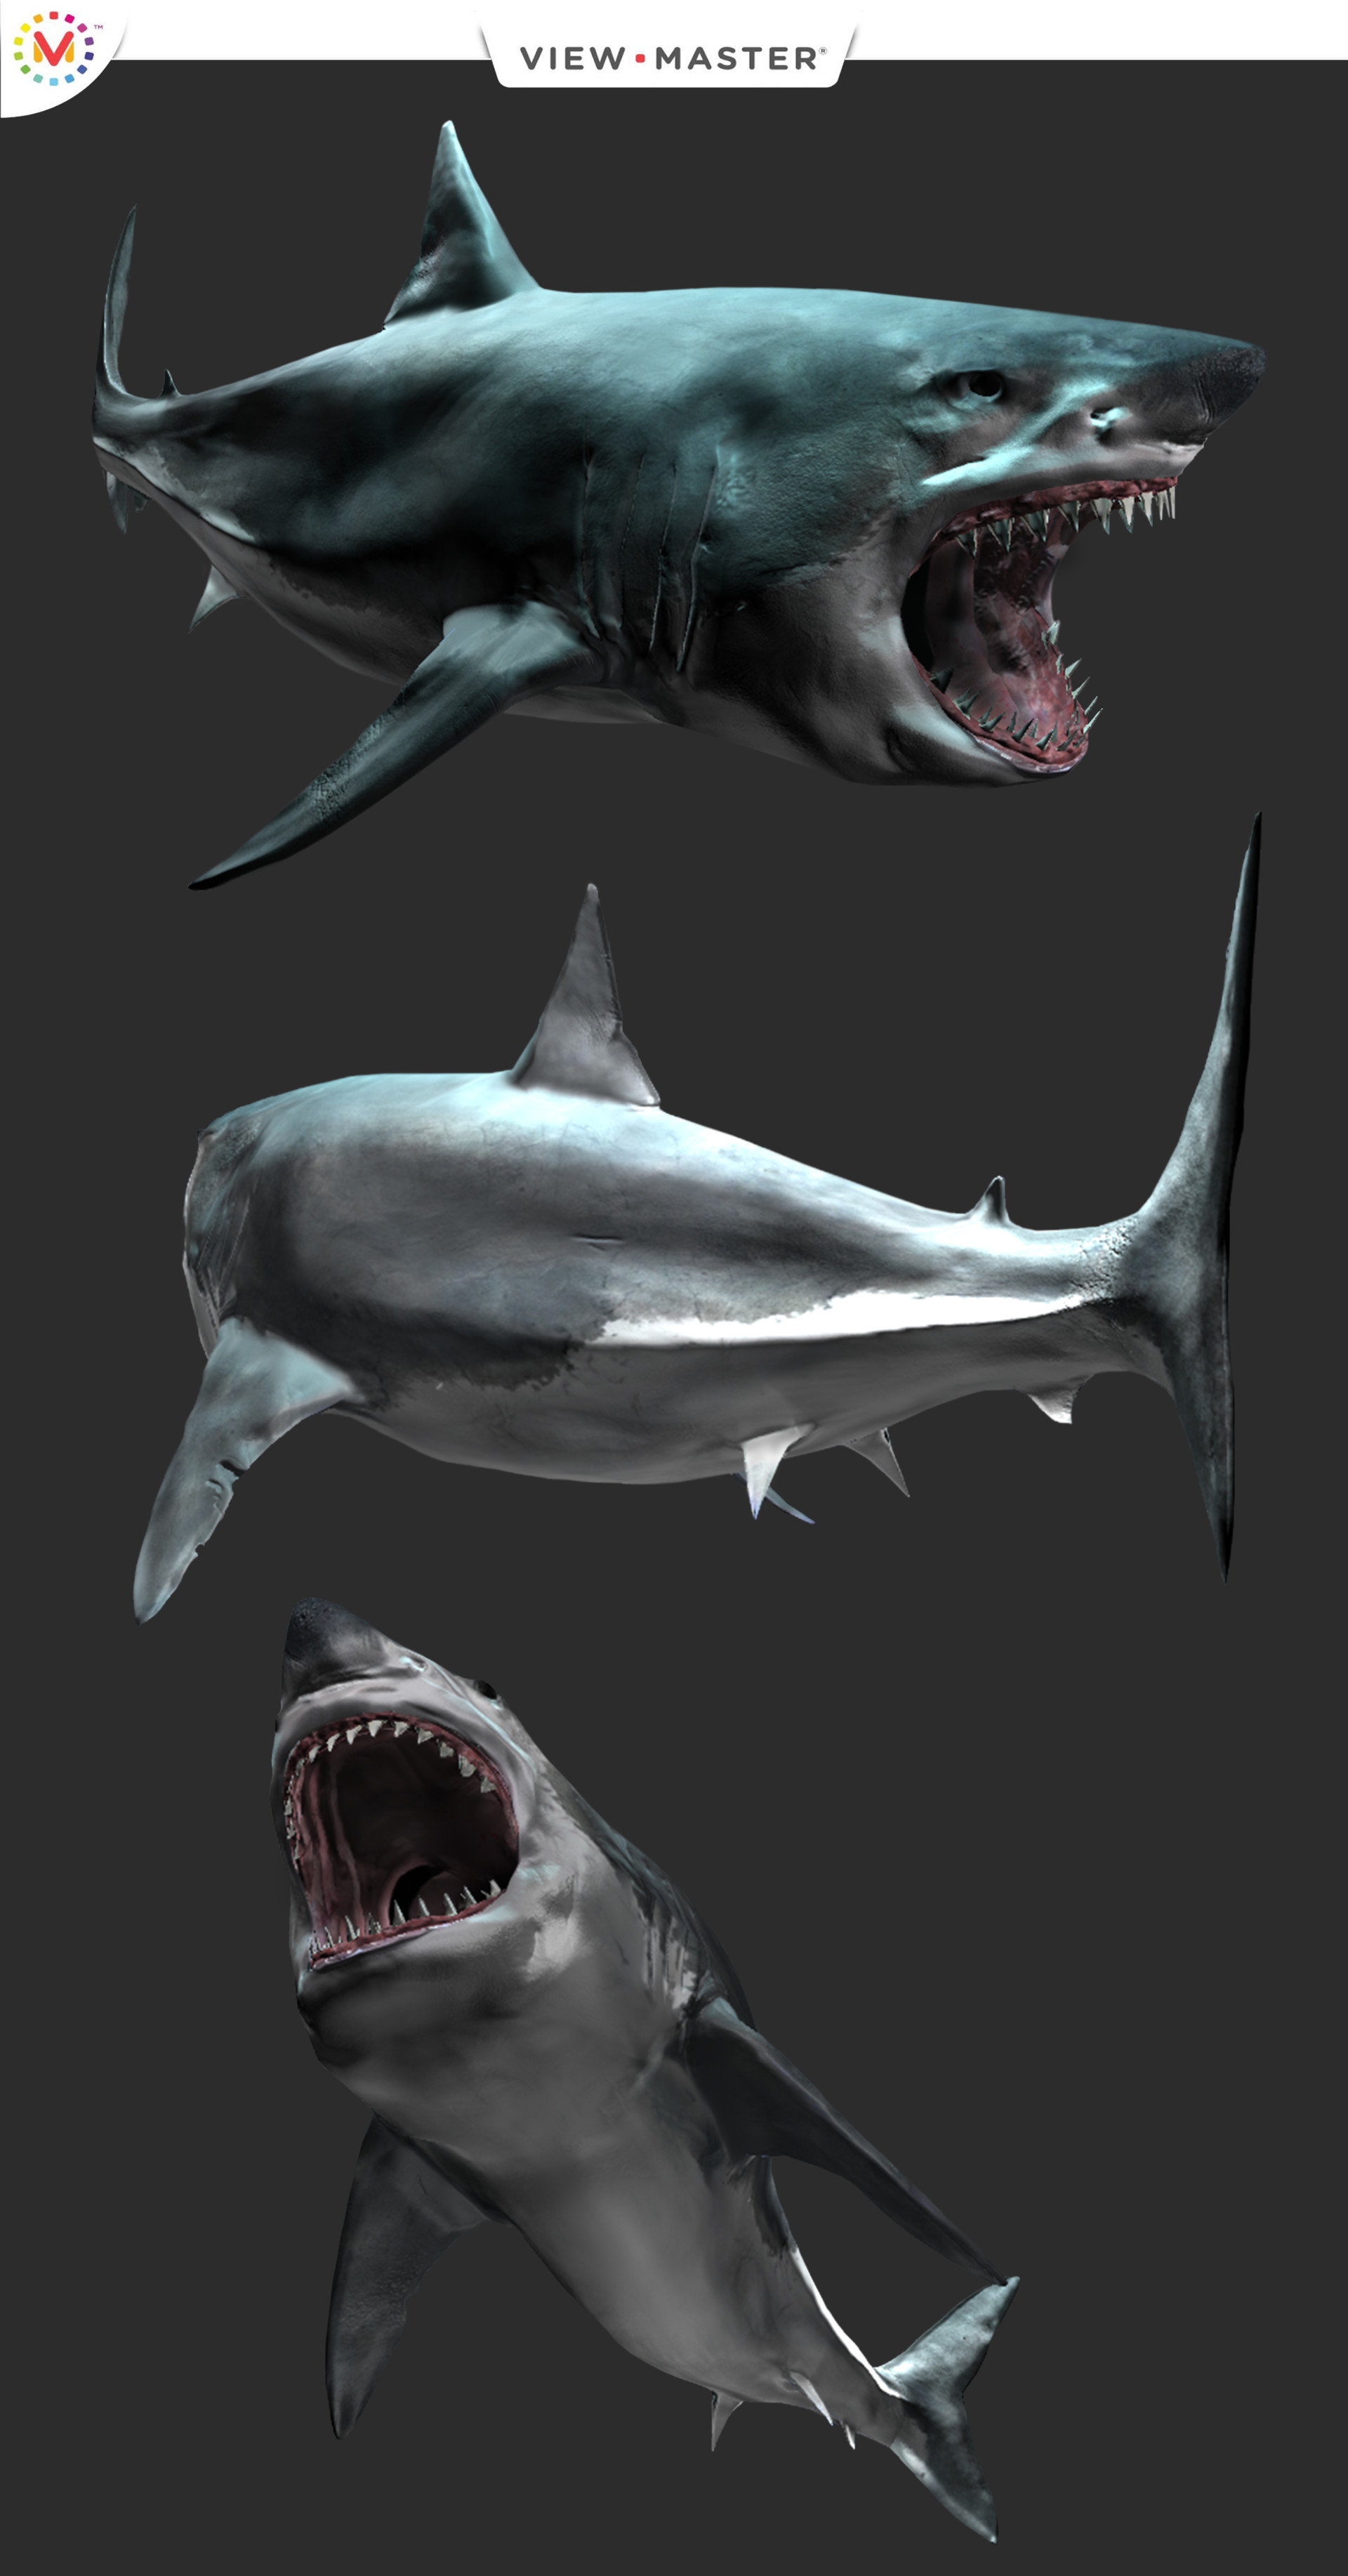 Sergio Garcia Poderoso - Shark - Discovery Underwater View-Master VR